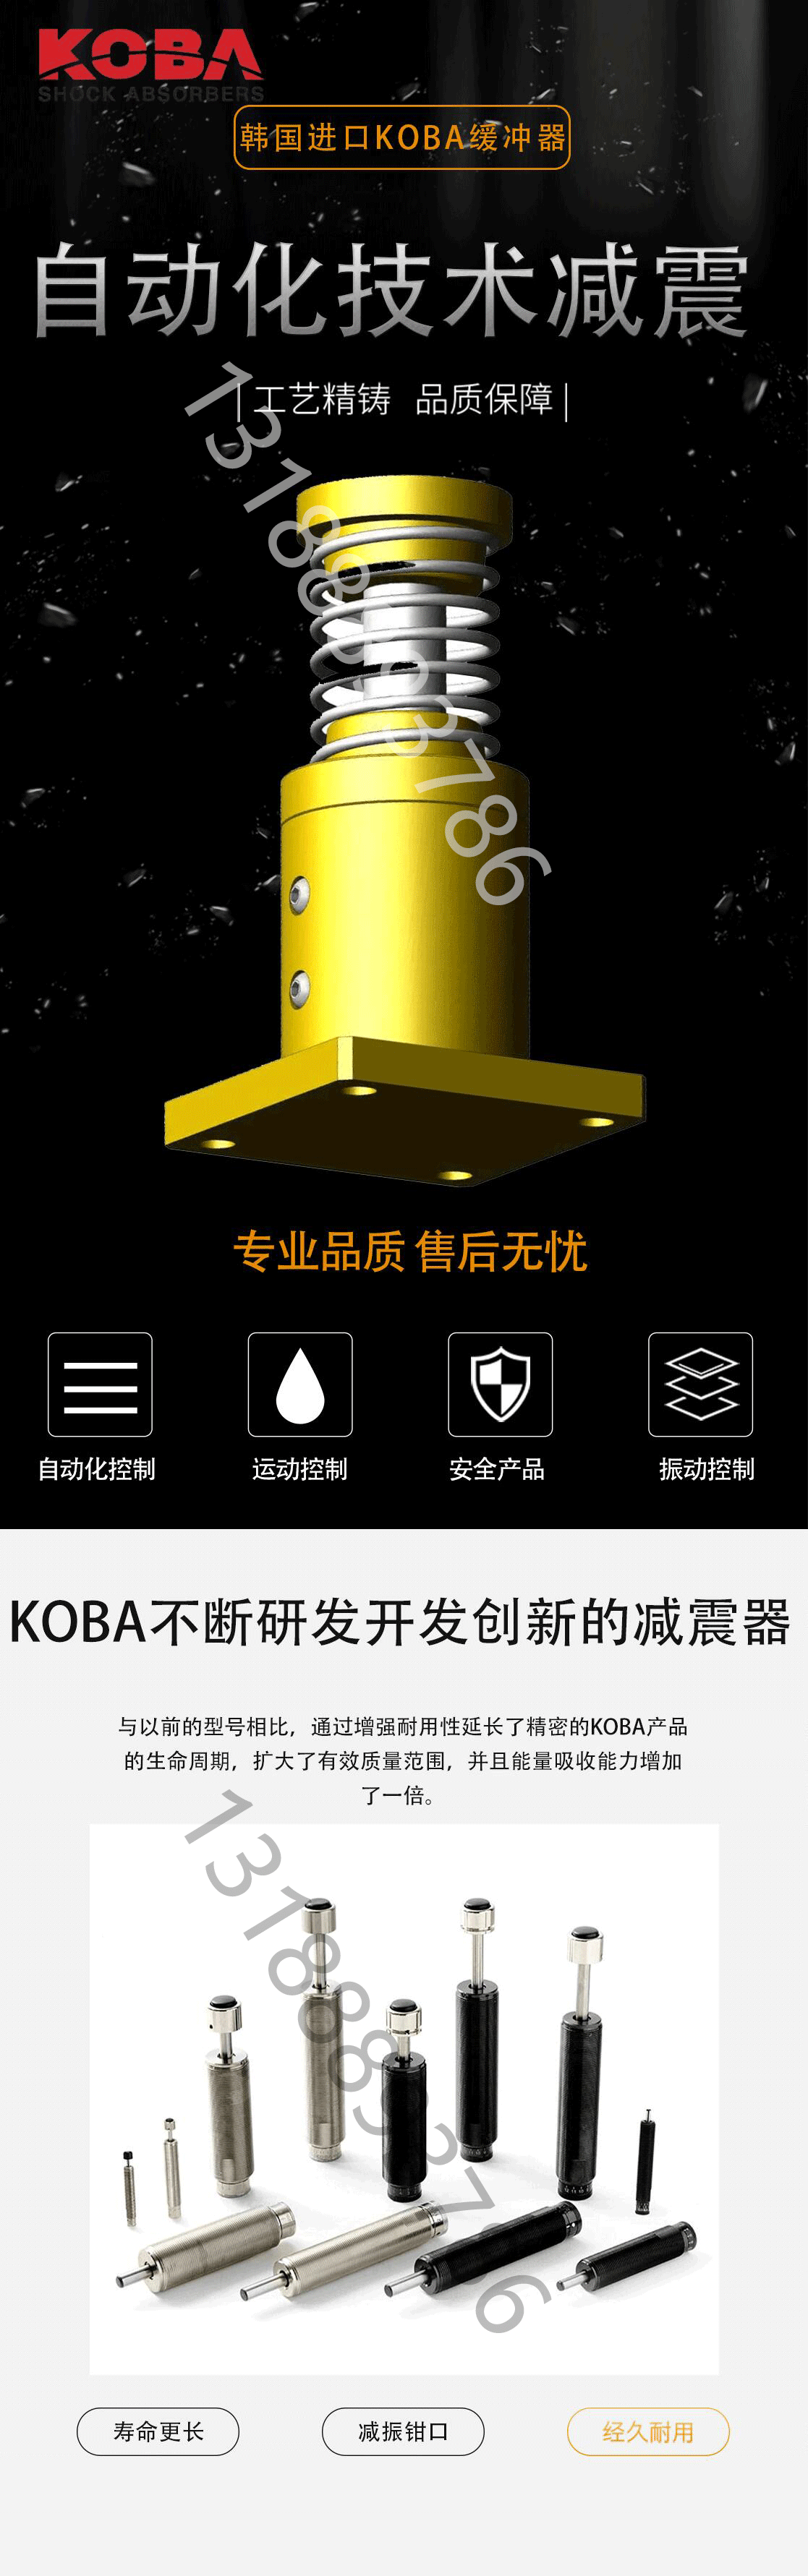 KOBA缓冲器适用于哪些工业领域？